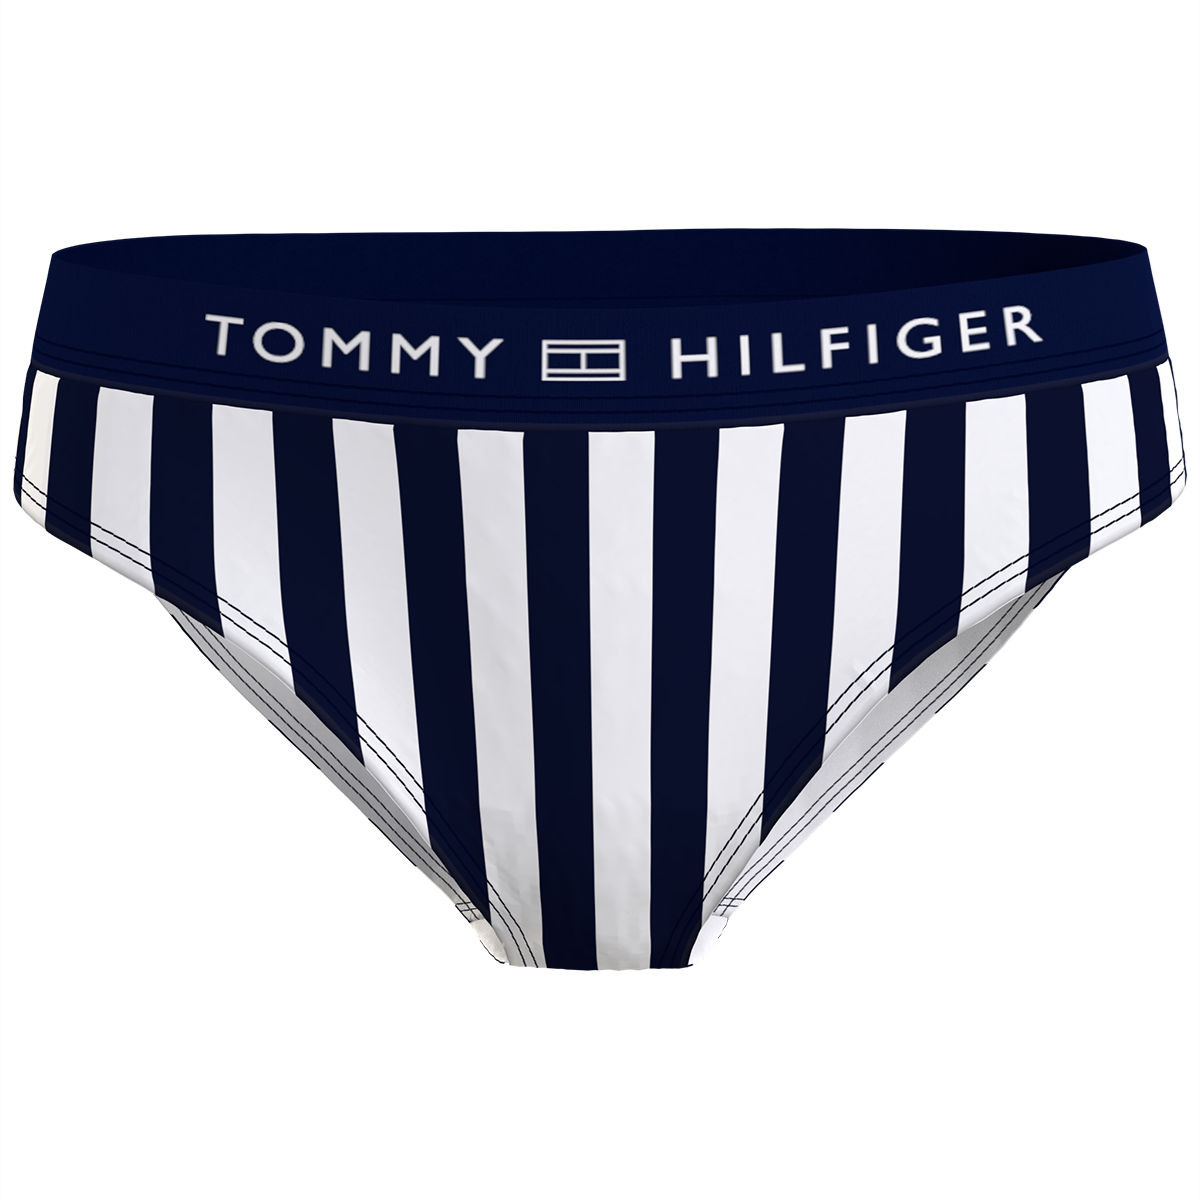 Tommy Hilfiger Lingeri Bikini Tai trusse, Farve: Sort/Hvid, Størrelse: S, Dame